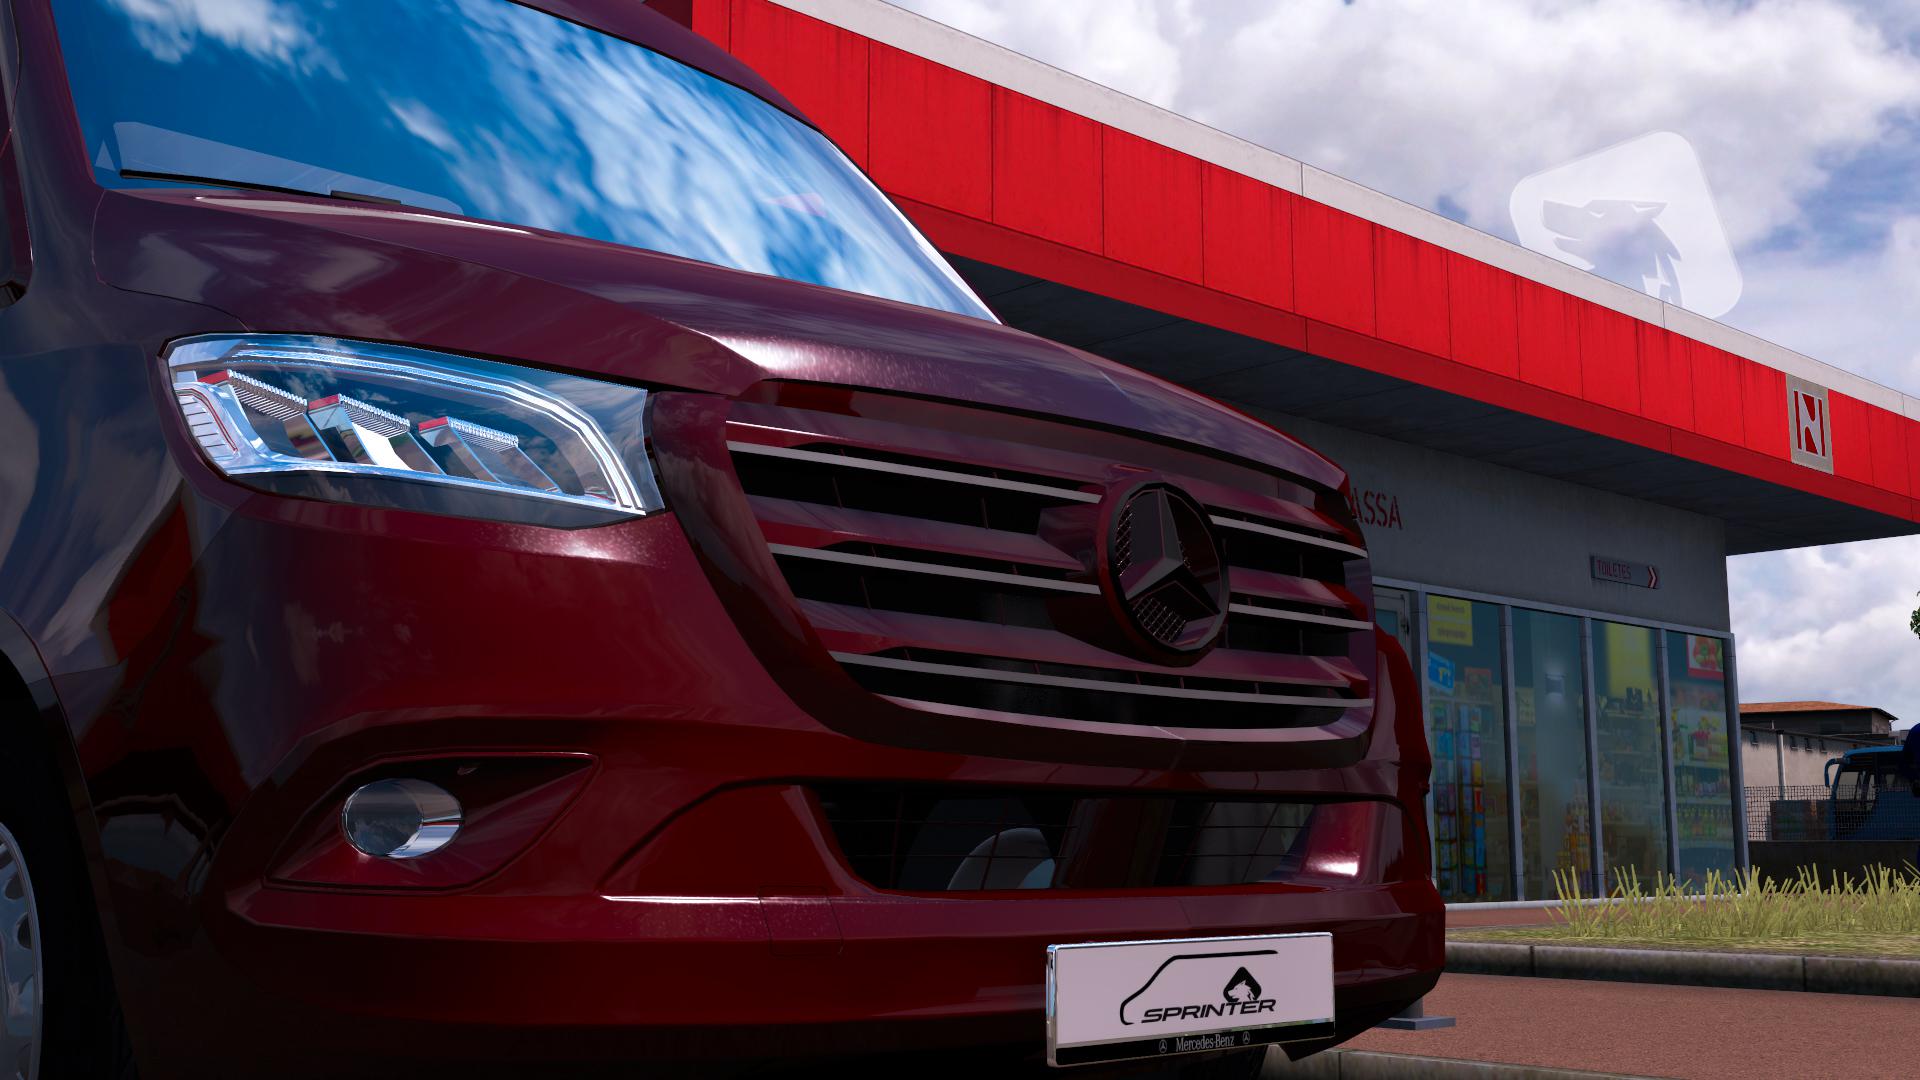 Mercedes Sprinter 2019 V0.3 Beta By Kacperkwc [1.36.X] - Ets2 Mods | Euro Truck Simulator 2 Mods - Ets2Mods.lt